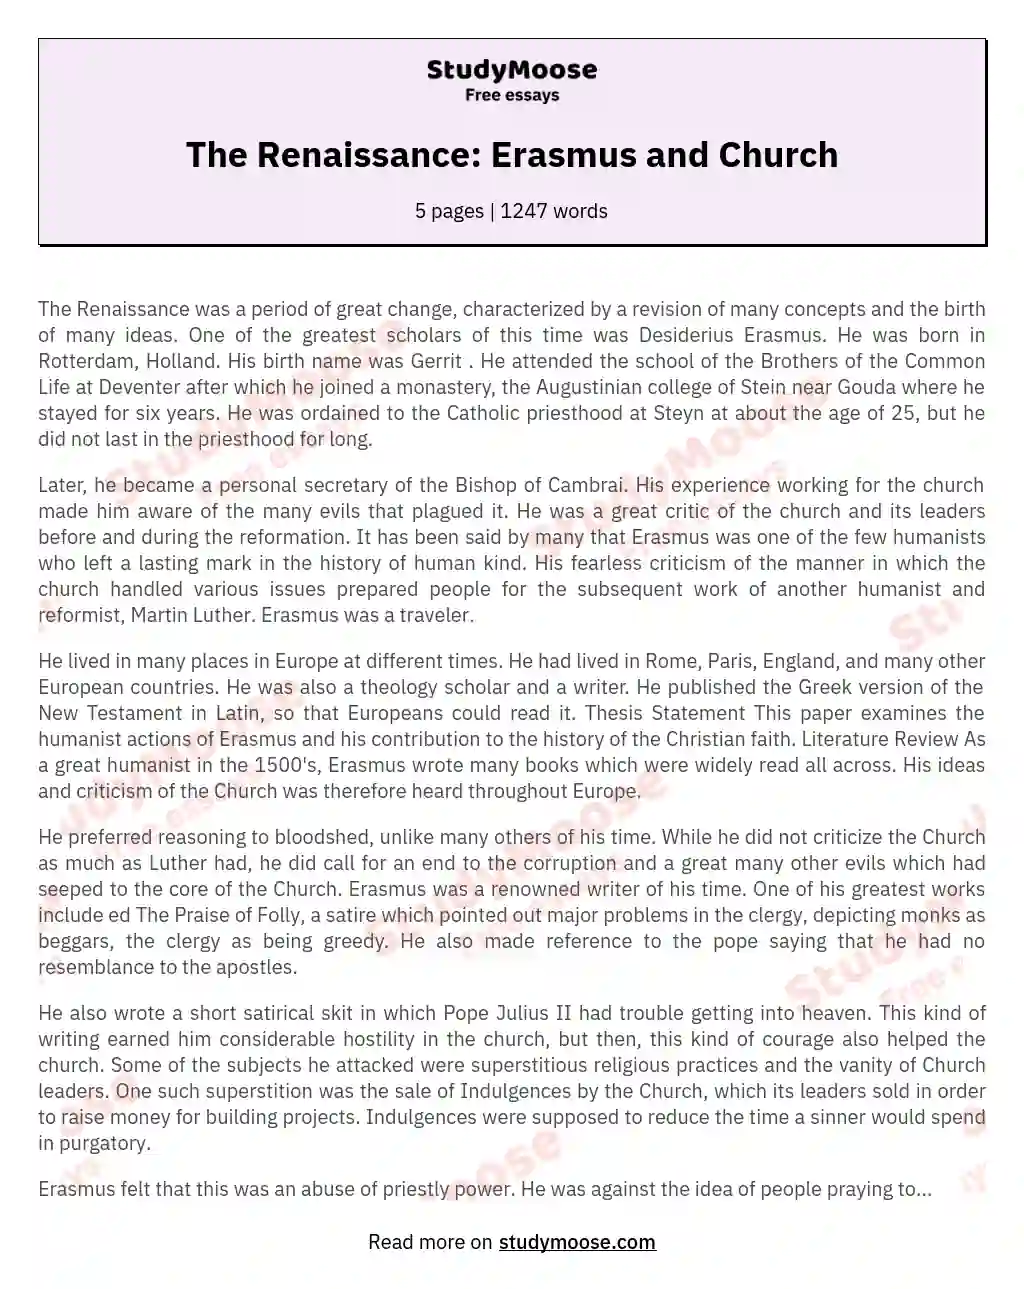 The Renaissance: Erasmus and Church essay